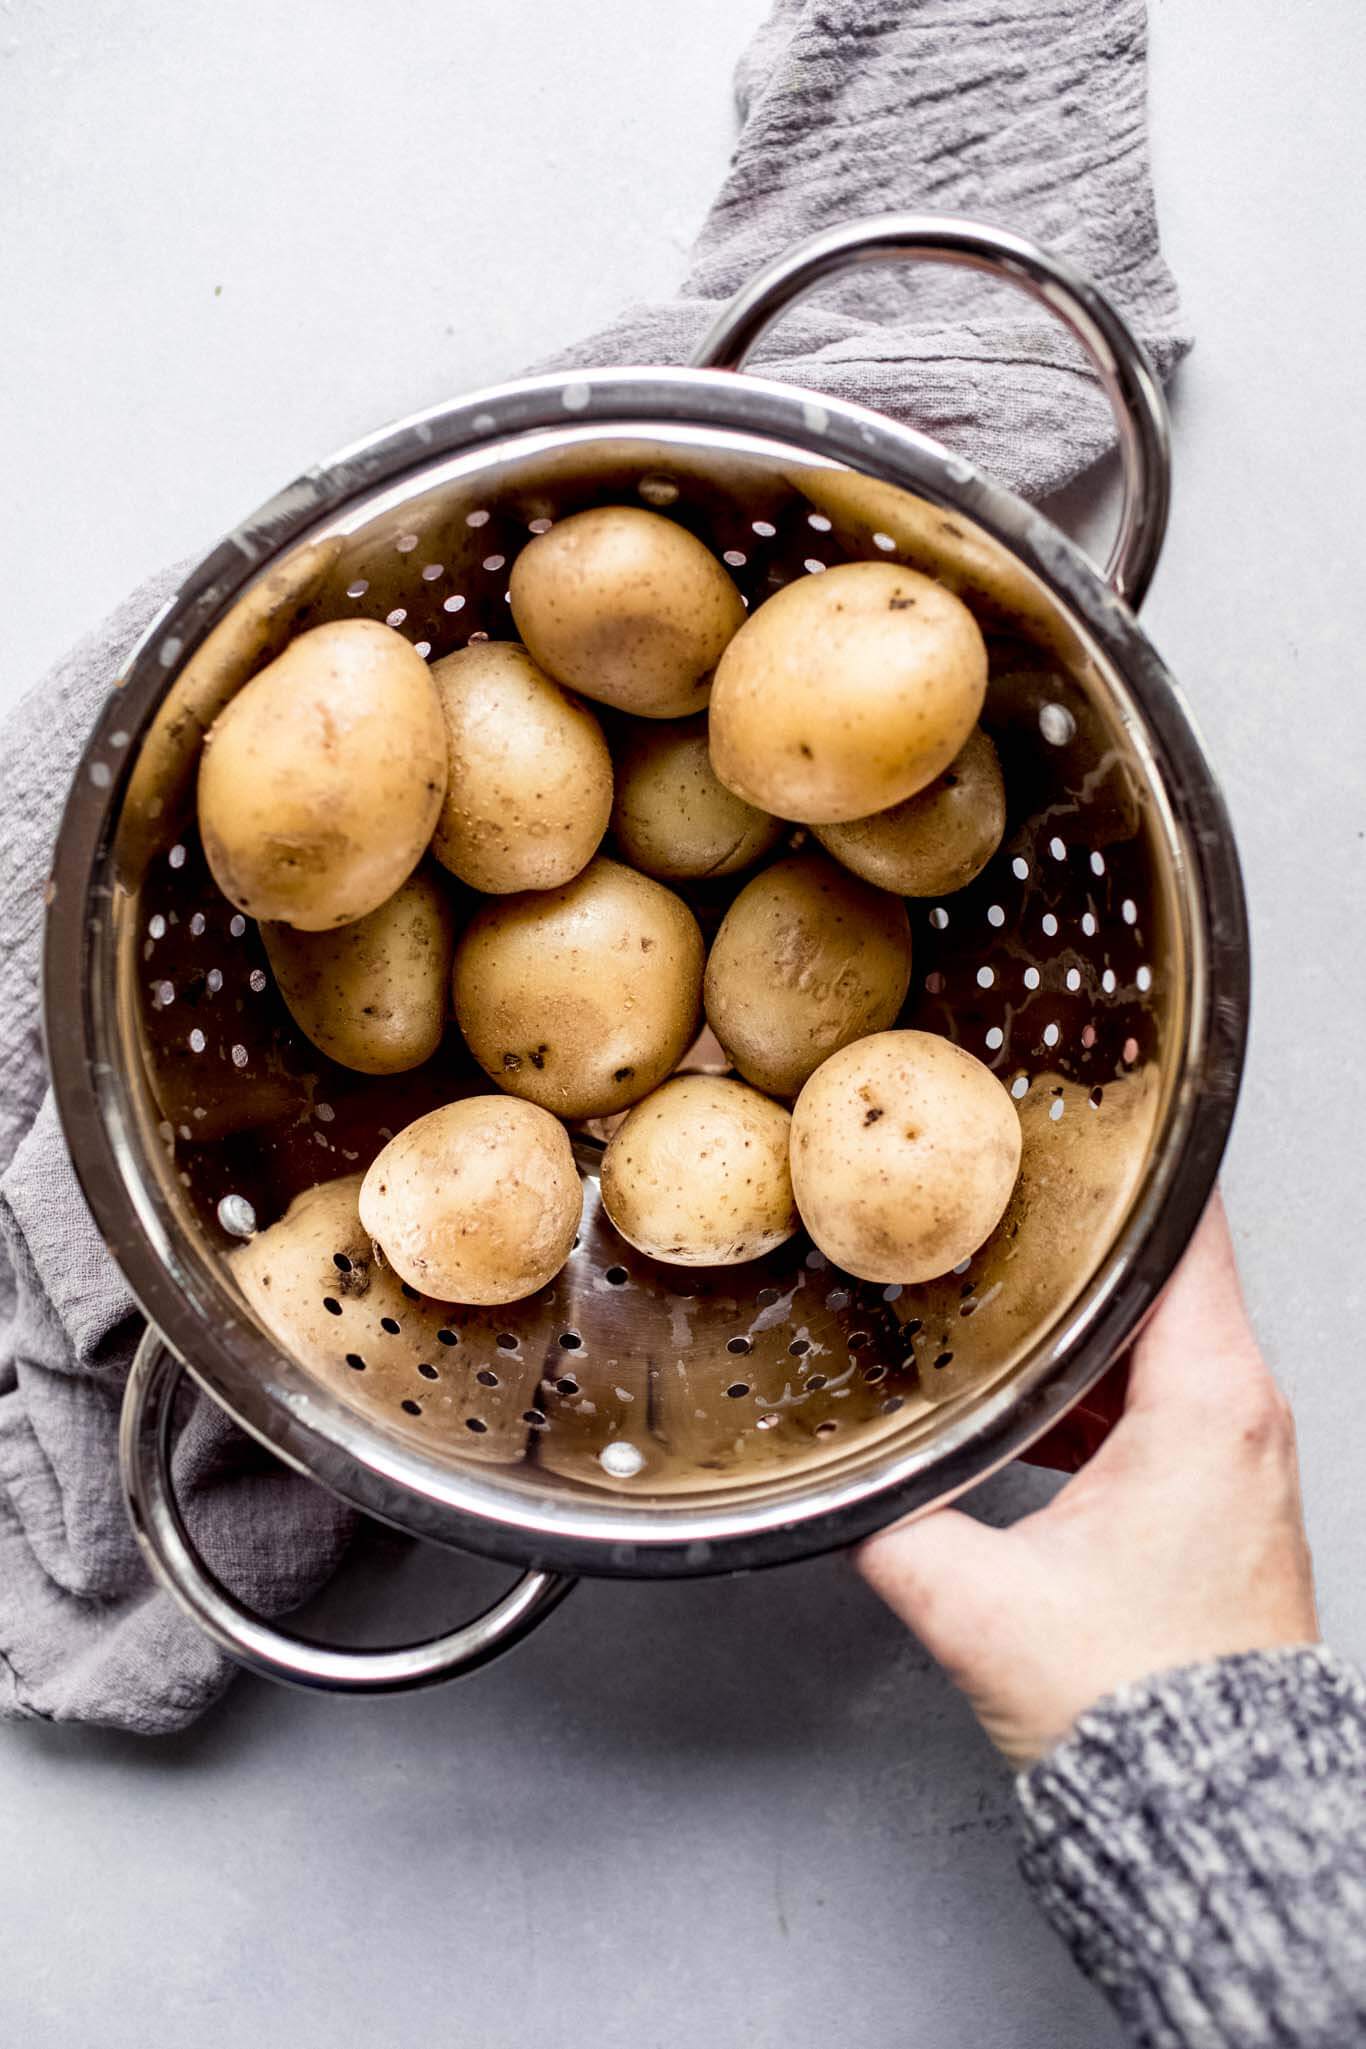 Baby potatoes in colander.